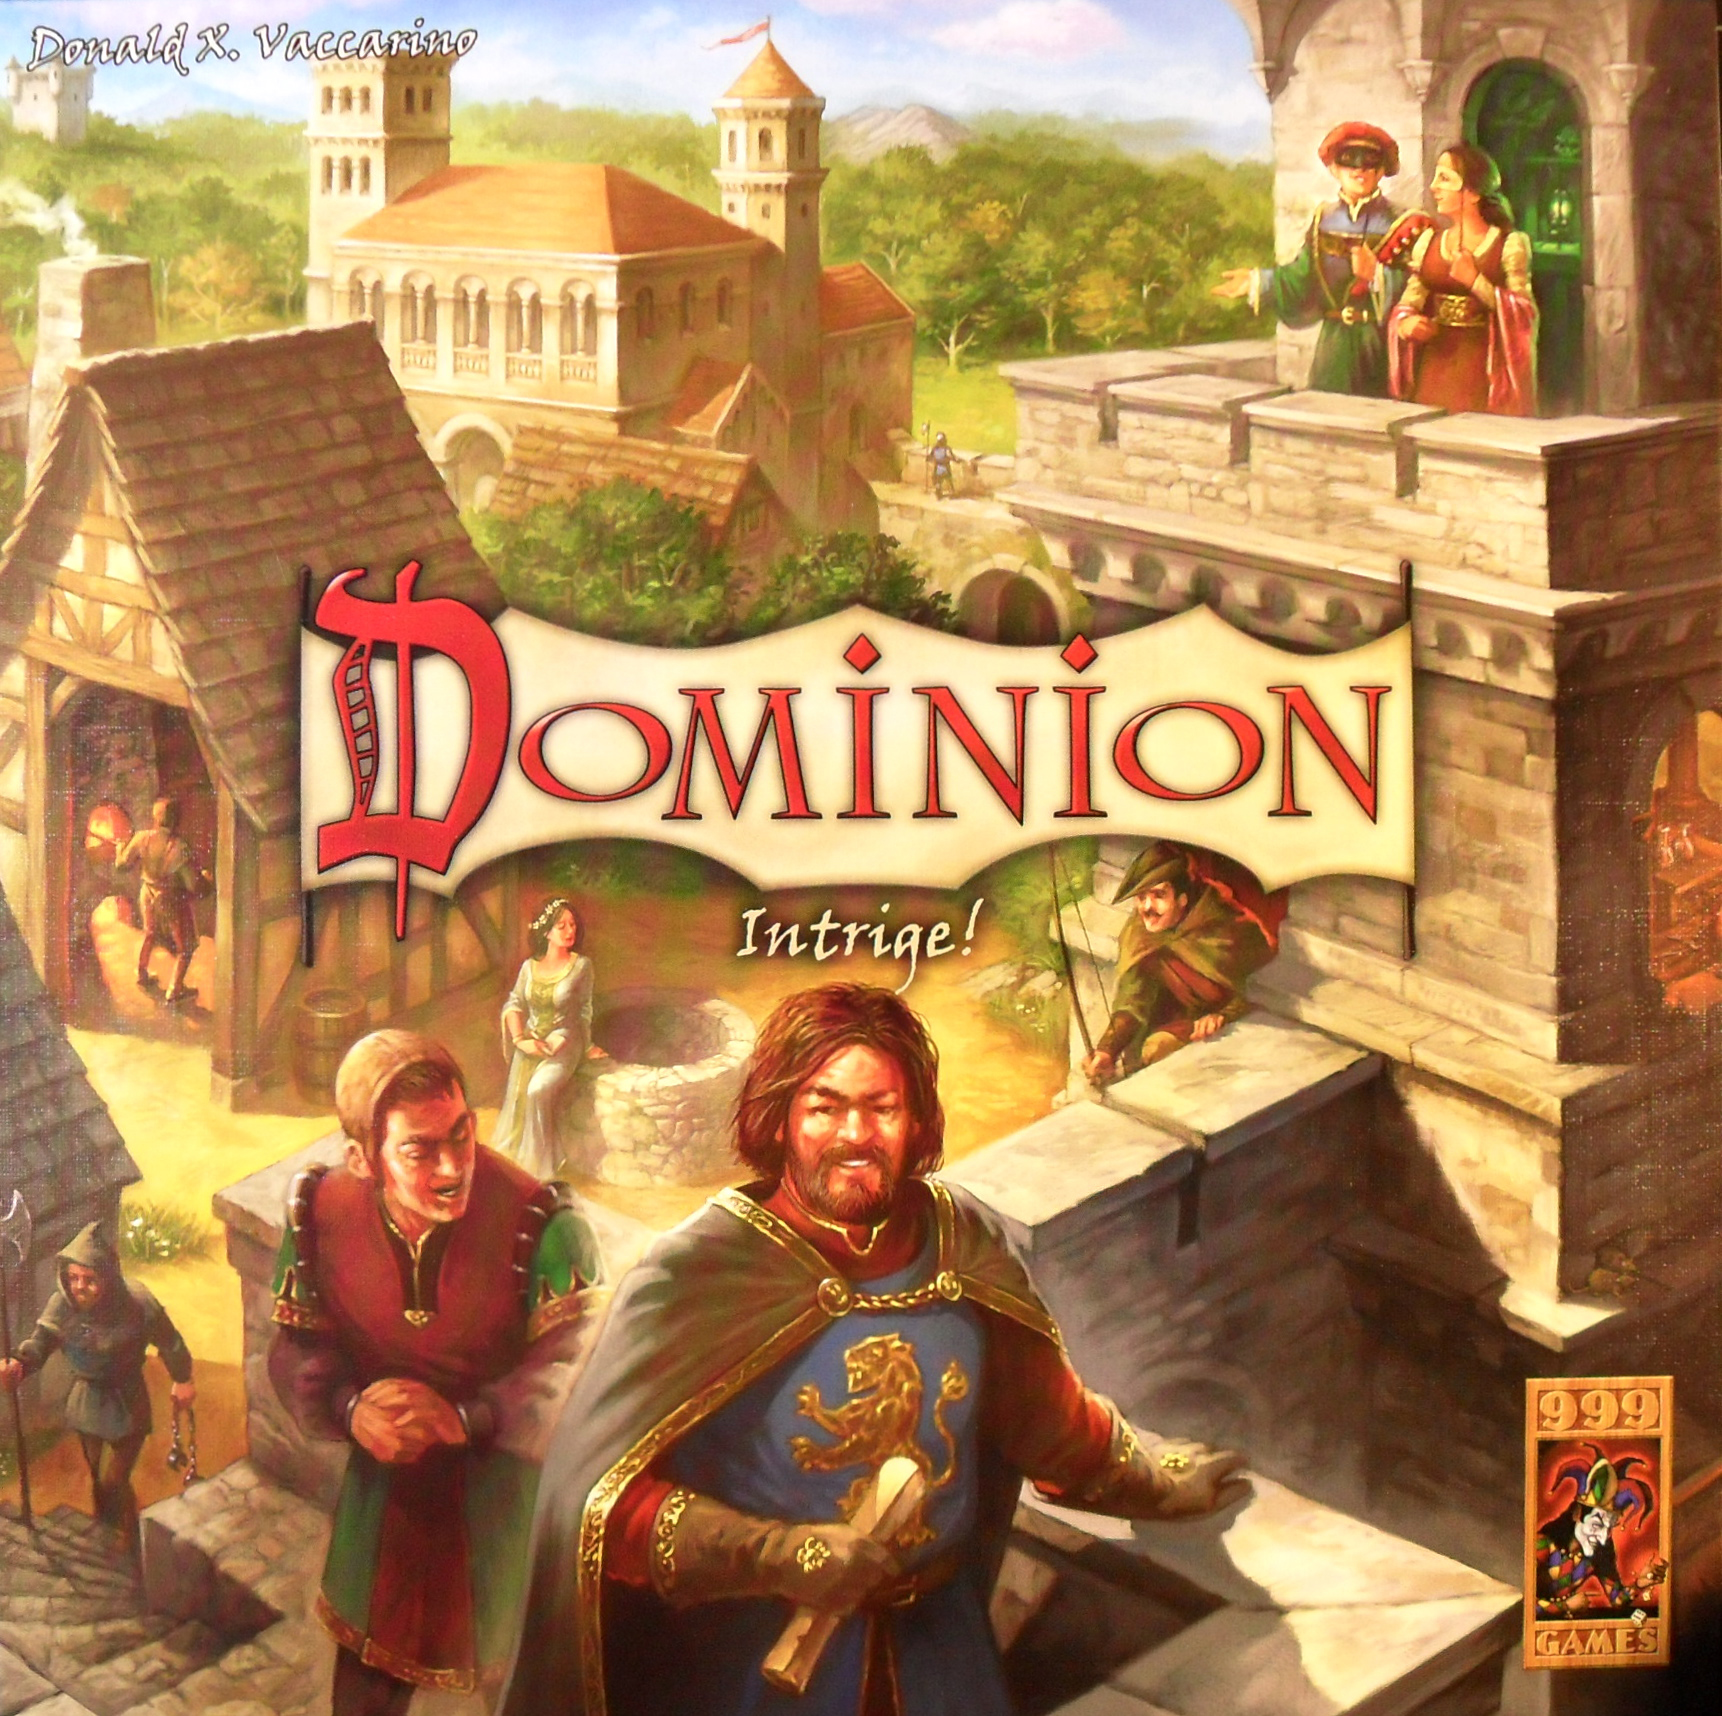 Dominion: Intrige!